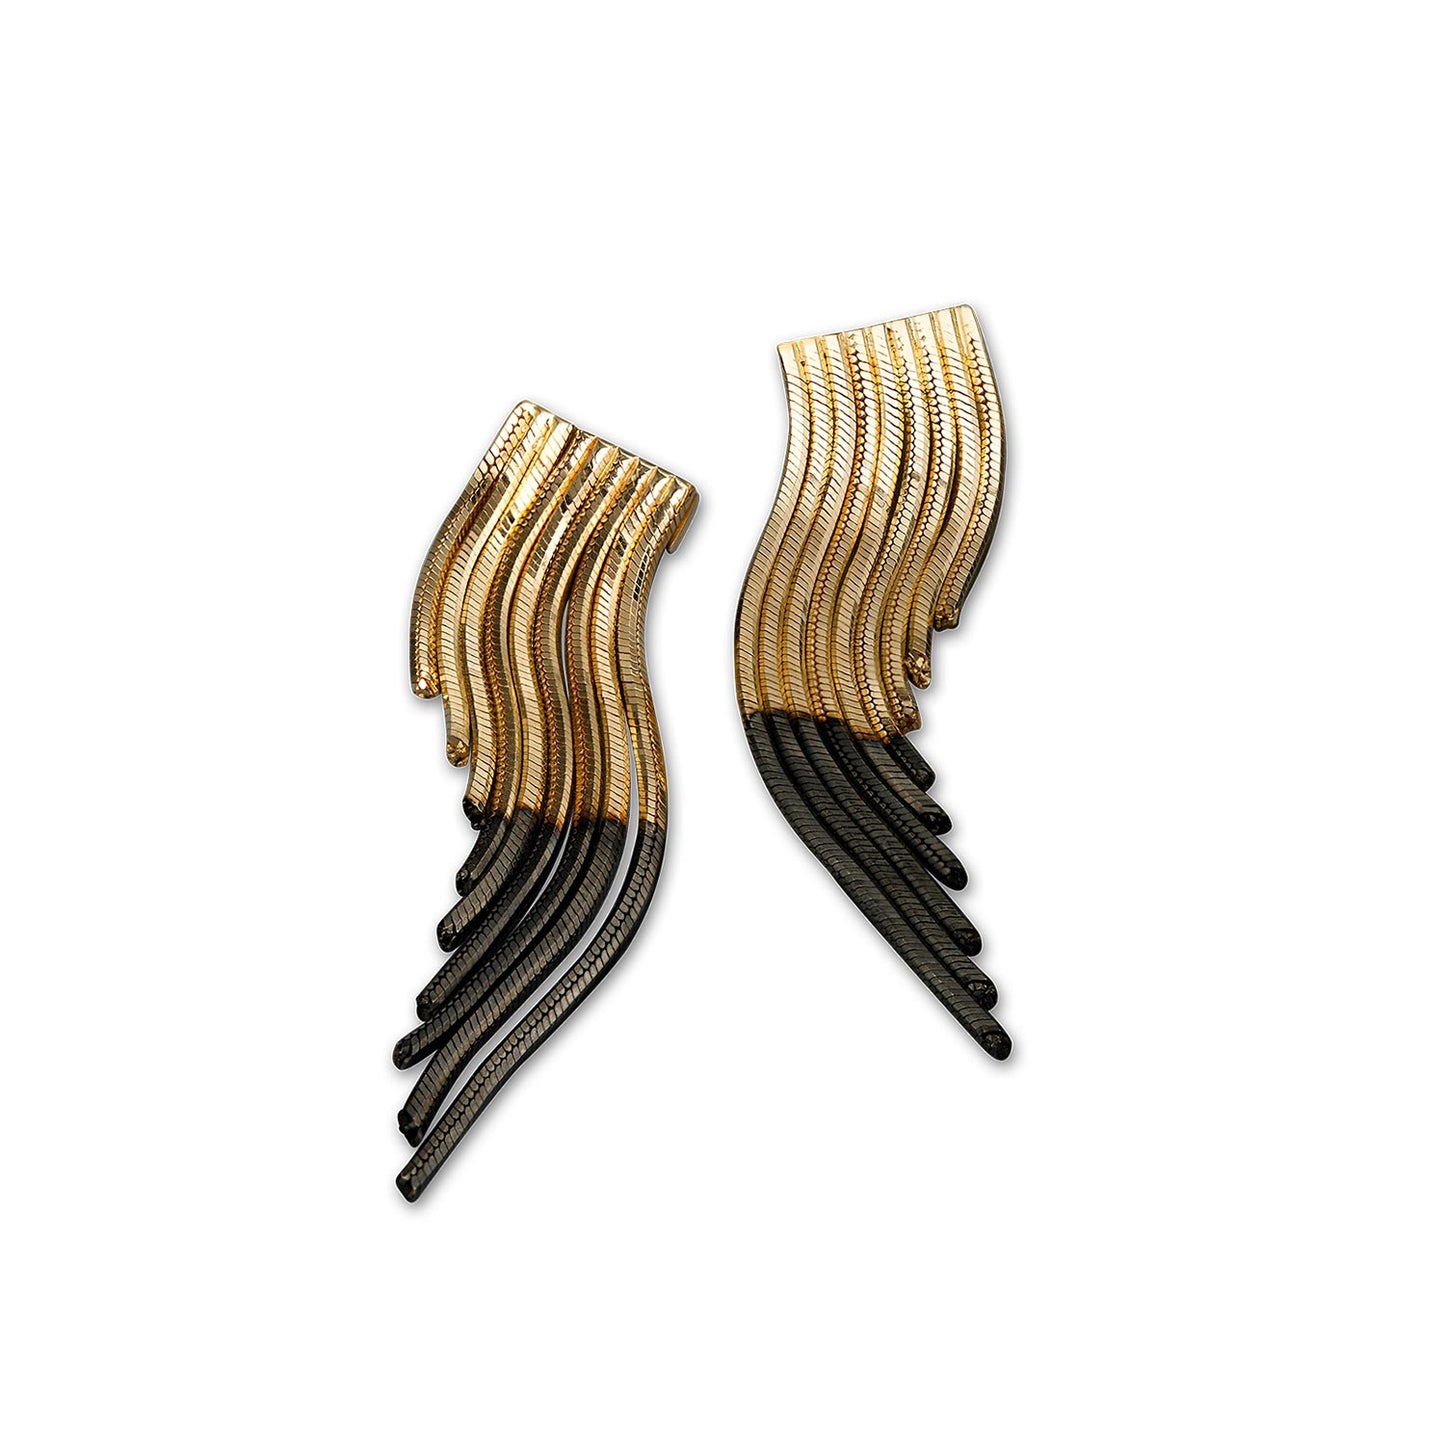 Iosselliani O 846/19AW brass wing earrings